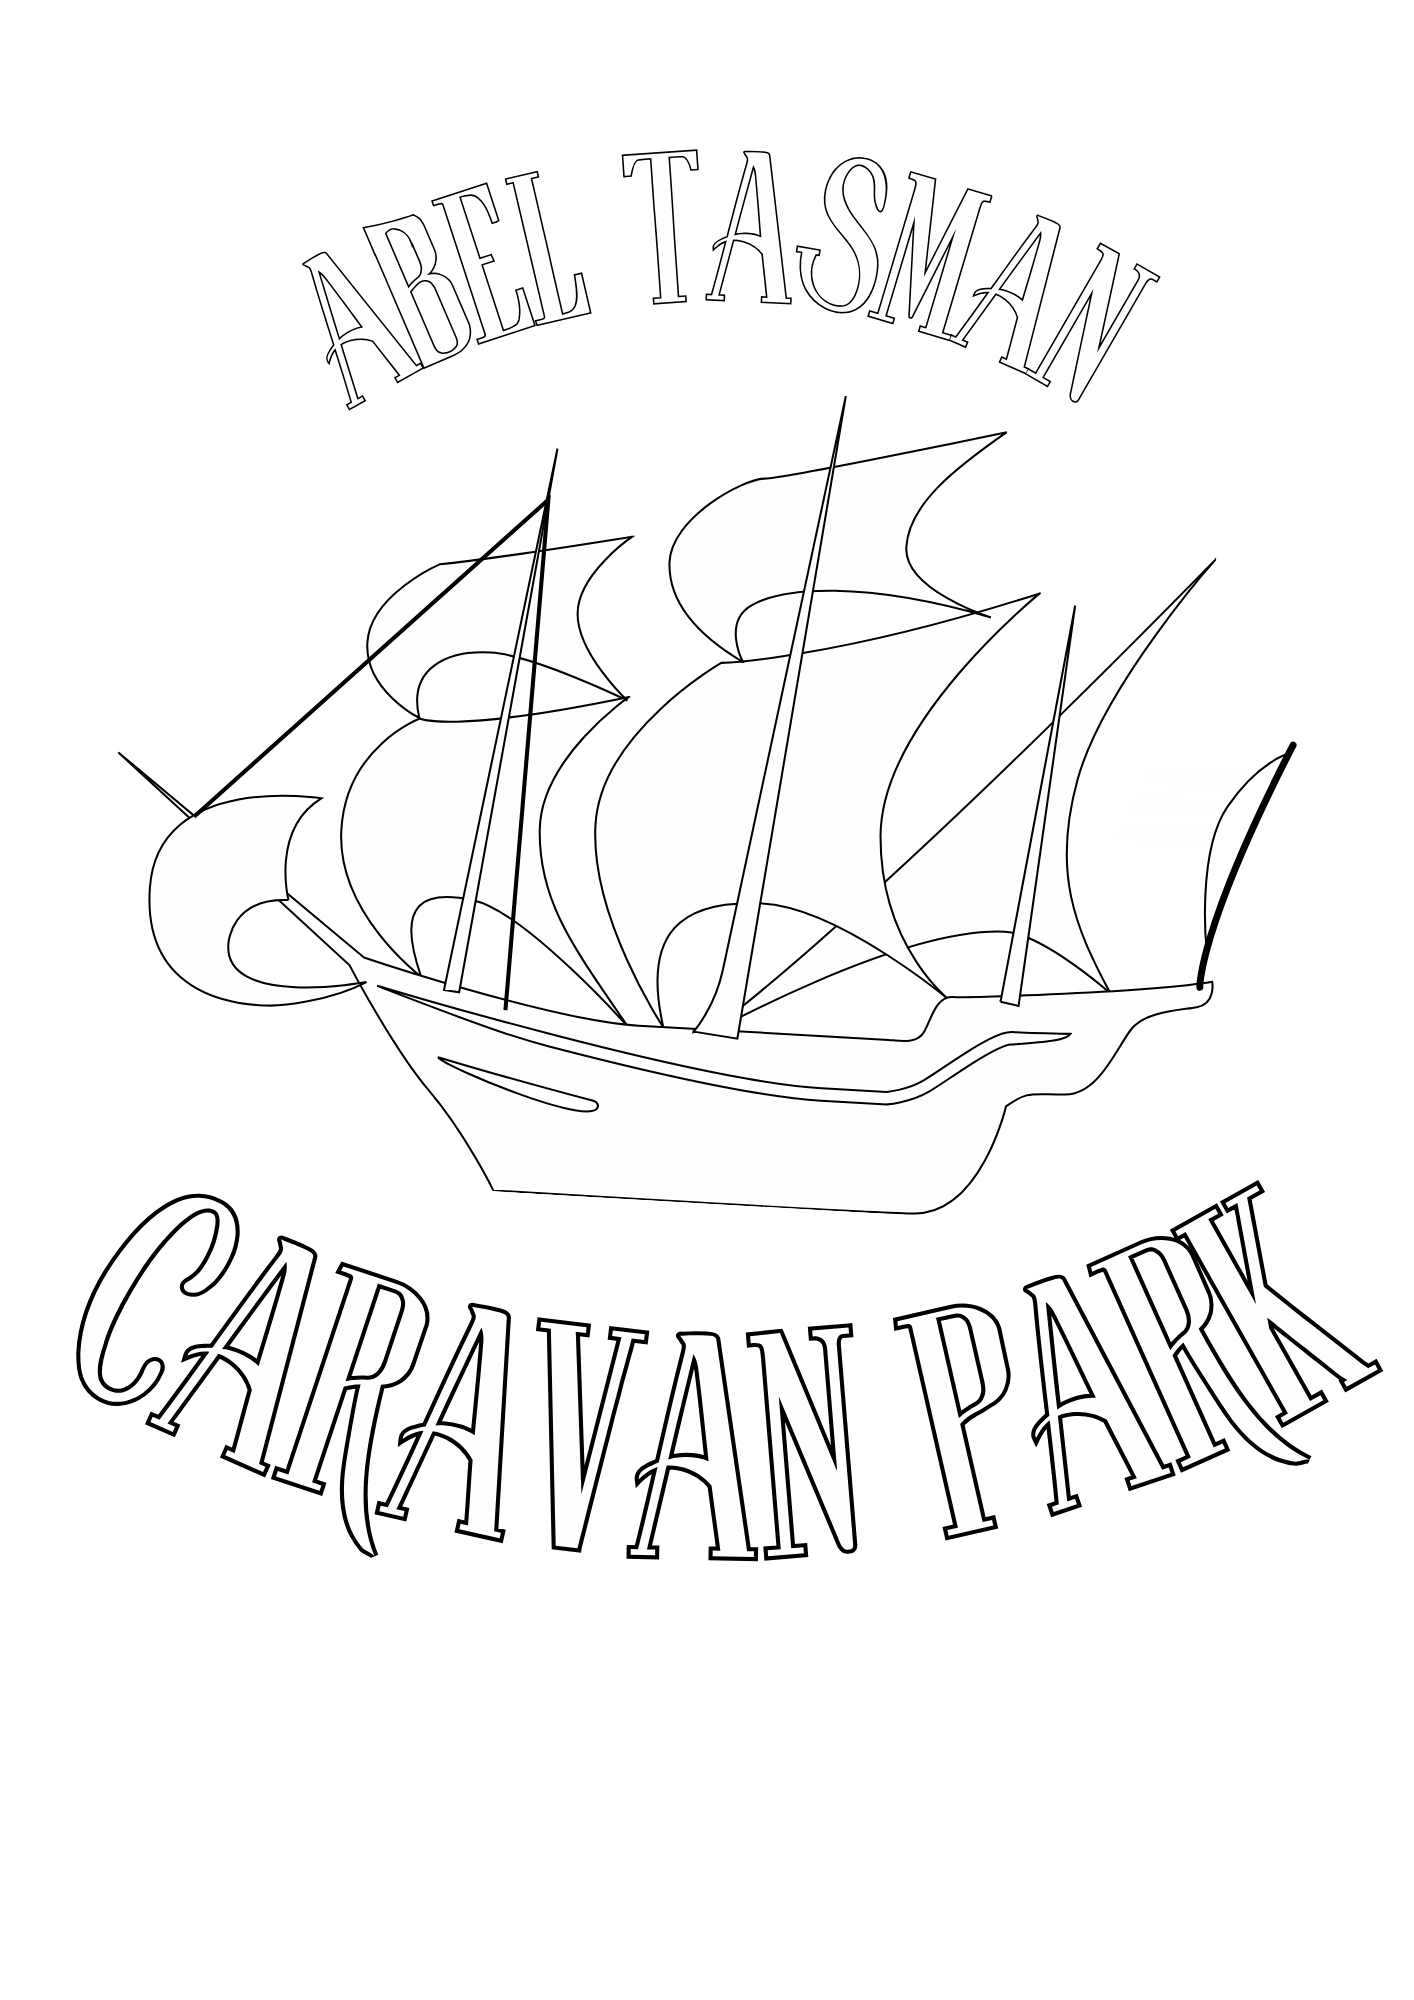 This is the logo for the Abel Tasman Caravan Park in Devonport Tasmania